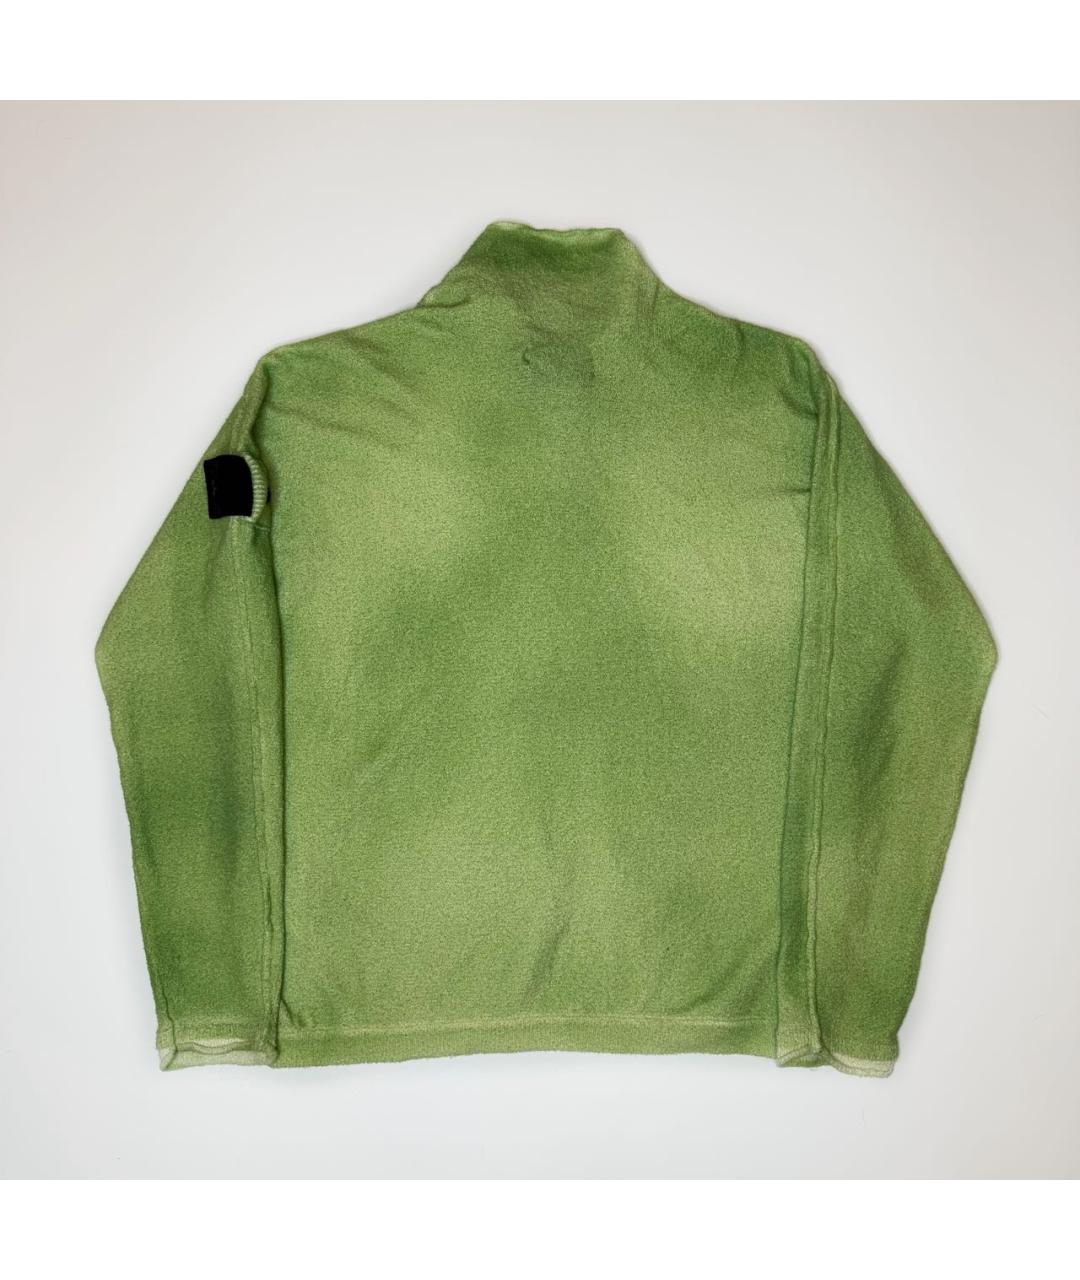 STONE ISLAND SHADOW PROJECT Зеленый хлопко-эластановый джемпер / свитер, фото 2